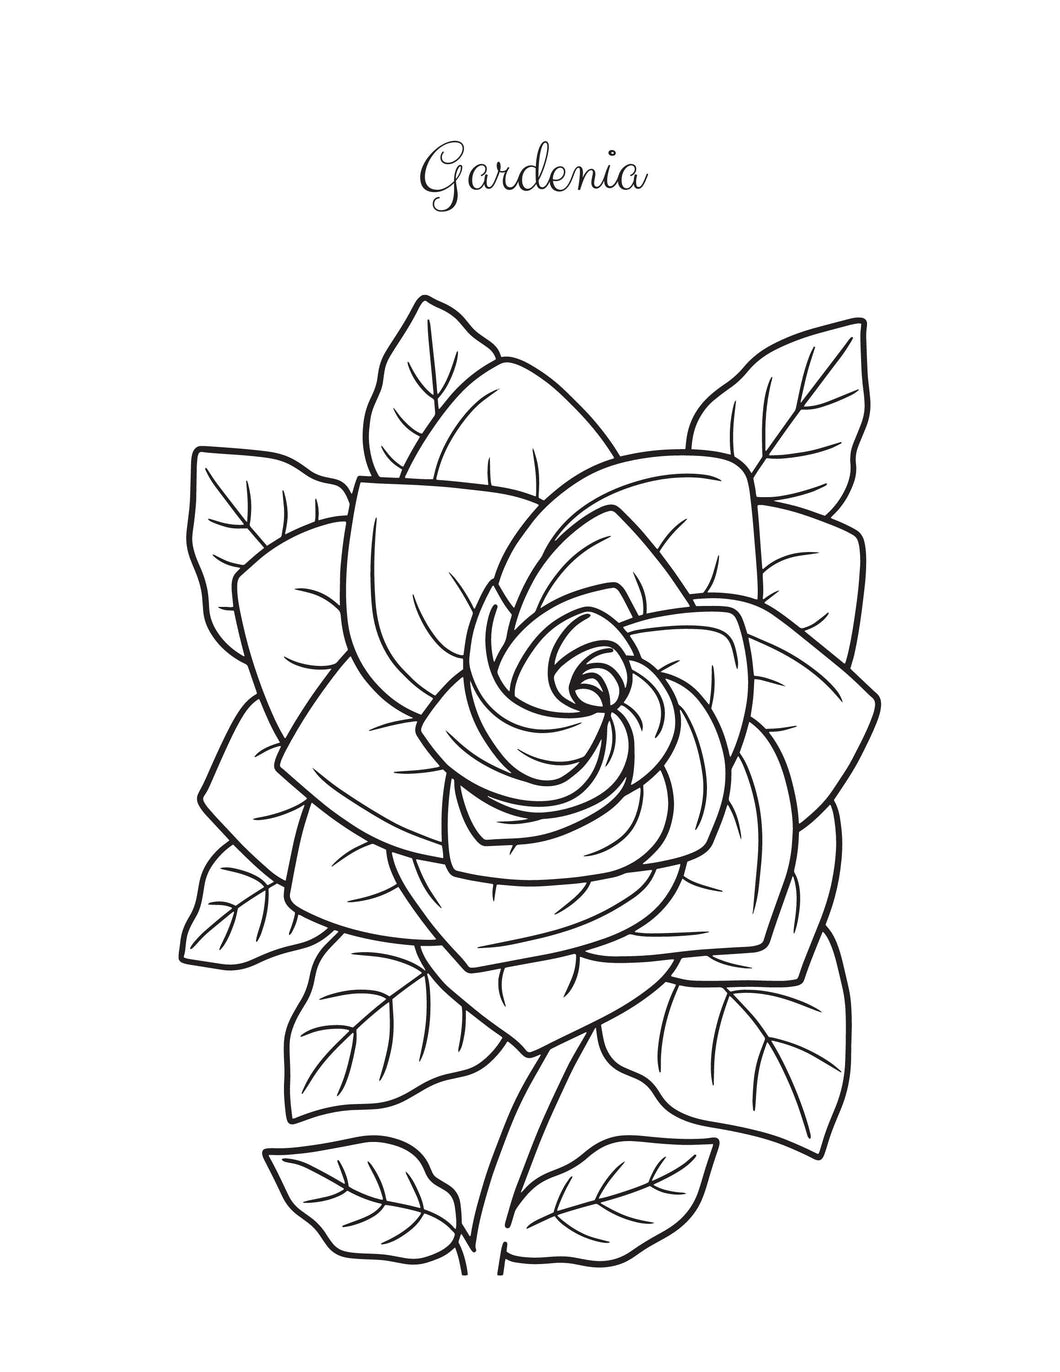 Gardenia Coloring Sheet